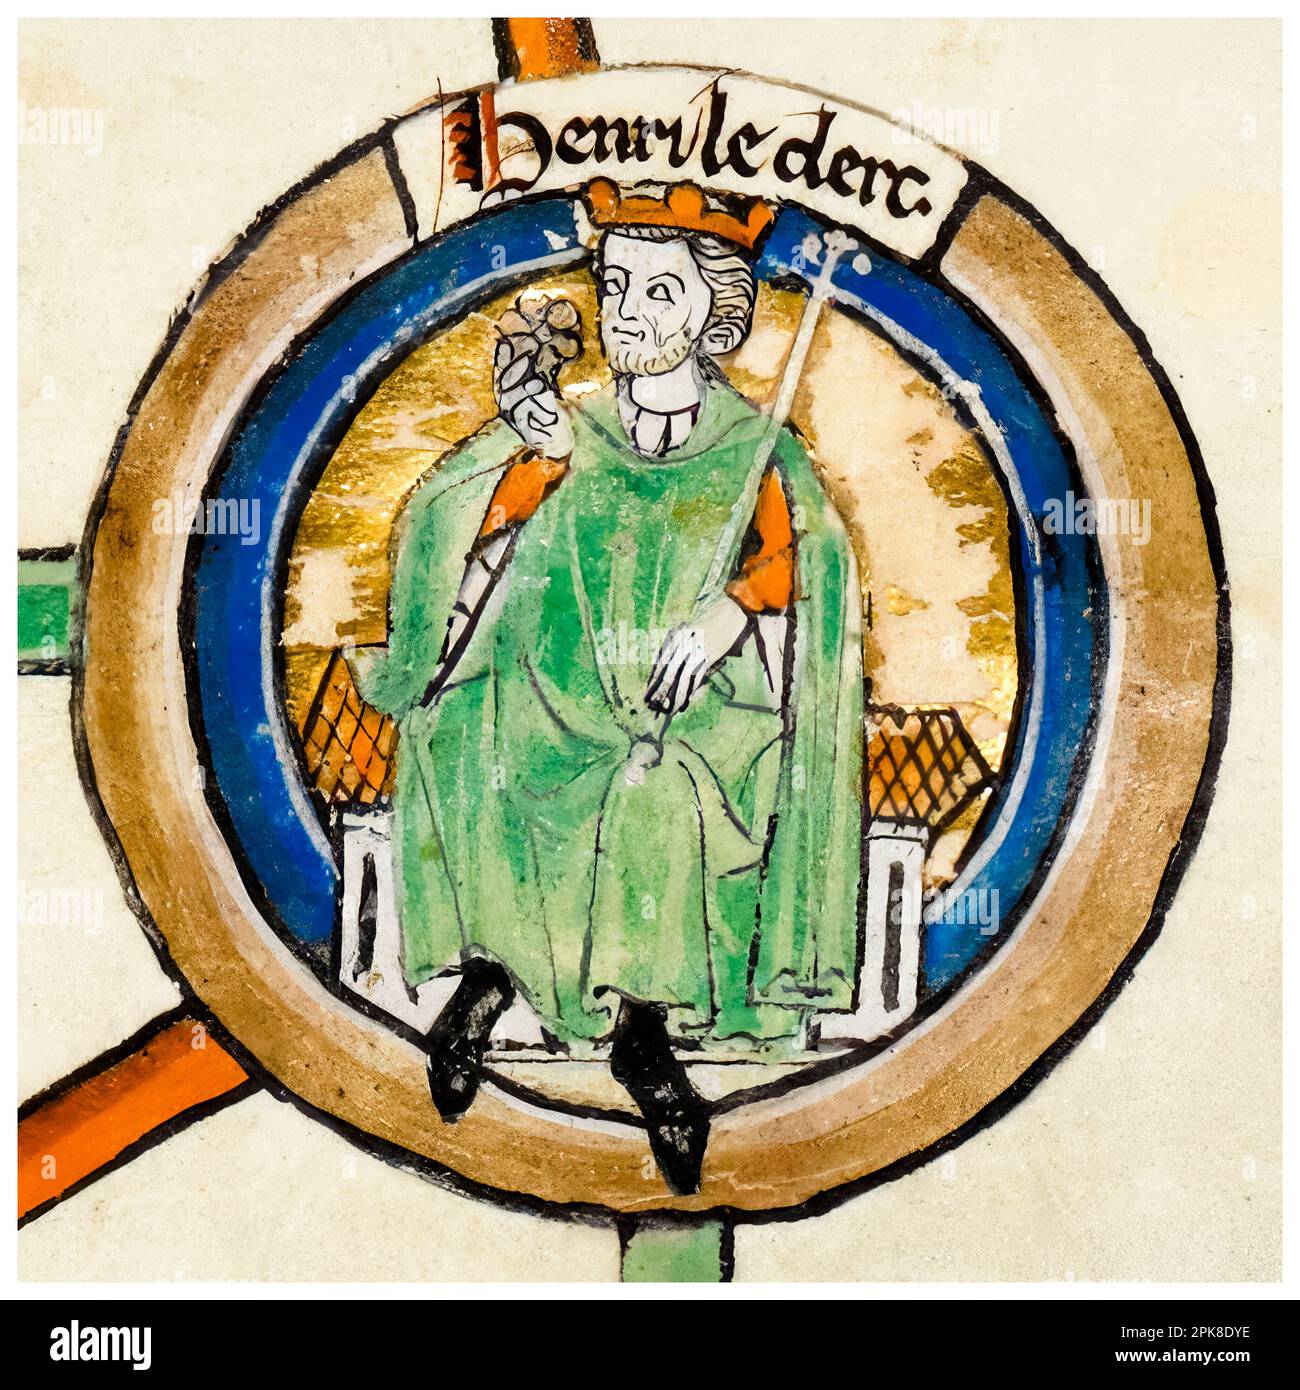 Enrique I de Inglaterra (circa 1068-1135), también conocido como Enrique Beauclerc, rey de Inglaterra (1100-1135), pintura manuscrita iluminada, antes de 1399 Foto de stock